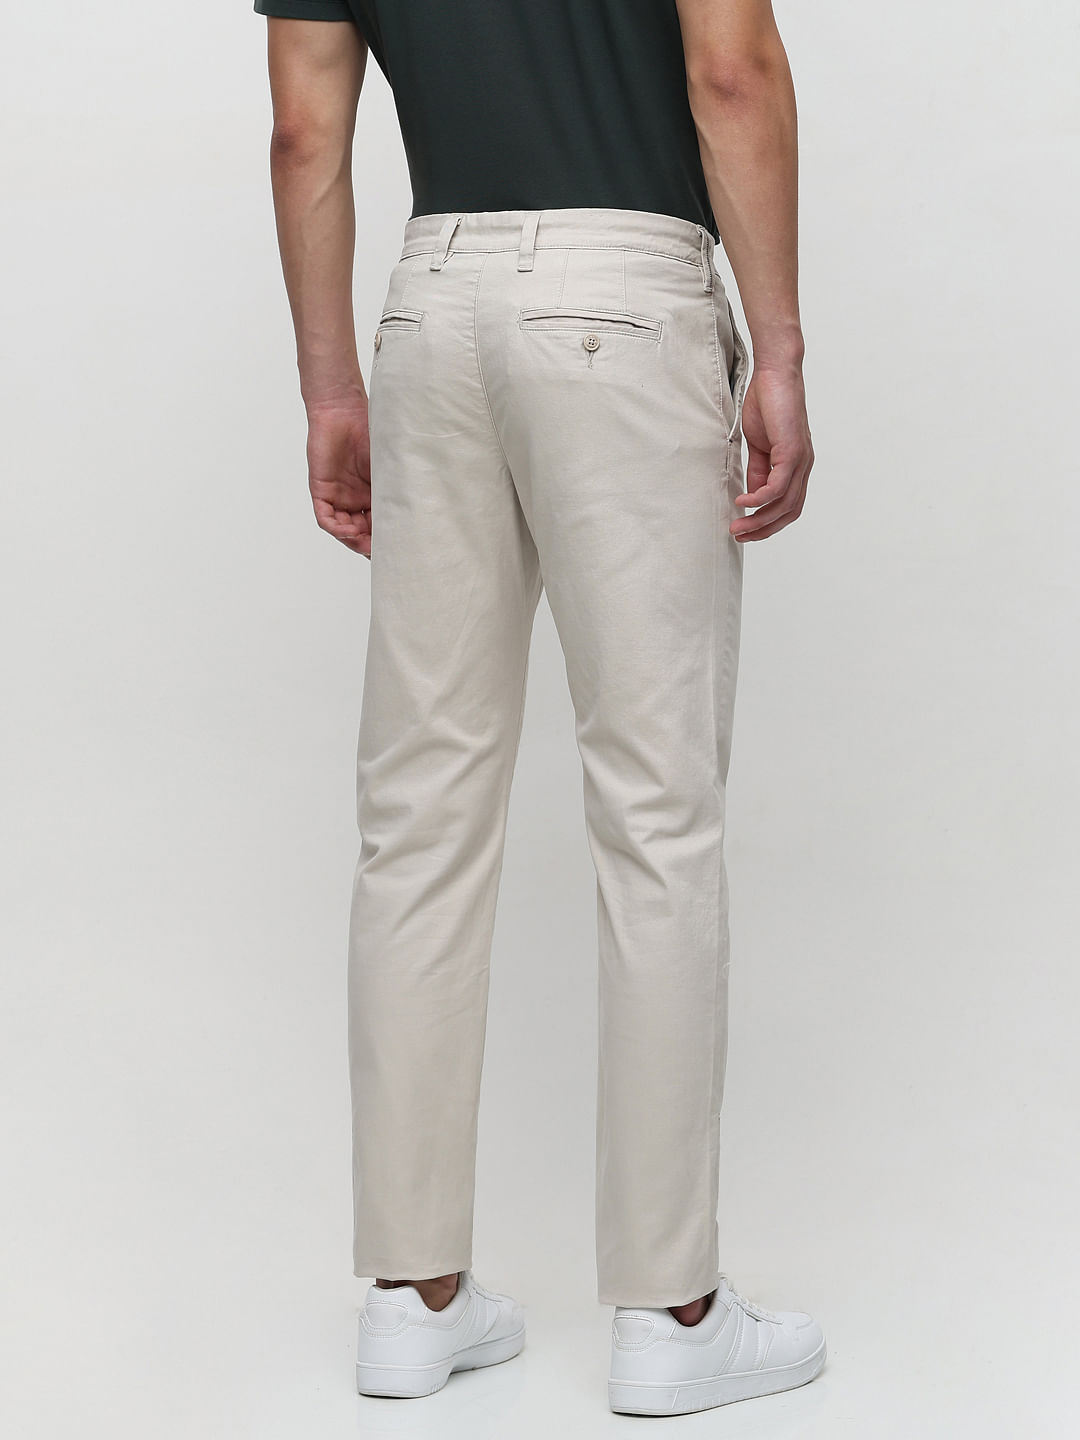 Men's Khaki Pants & Dress Pants | J.Crew Factory